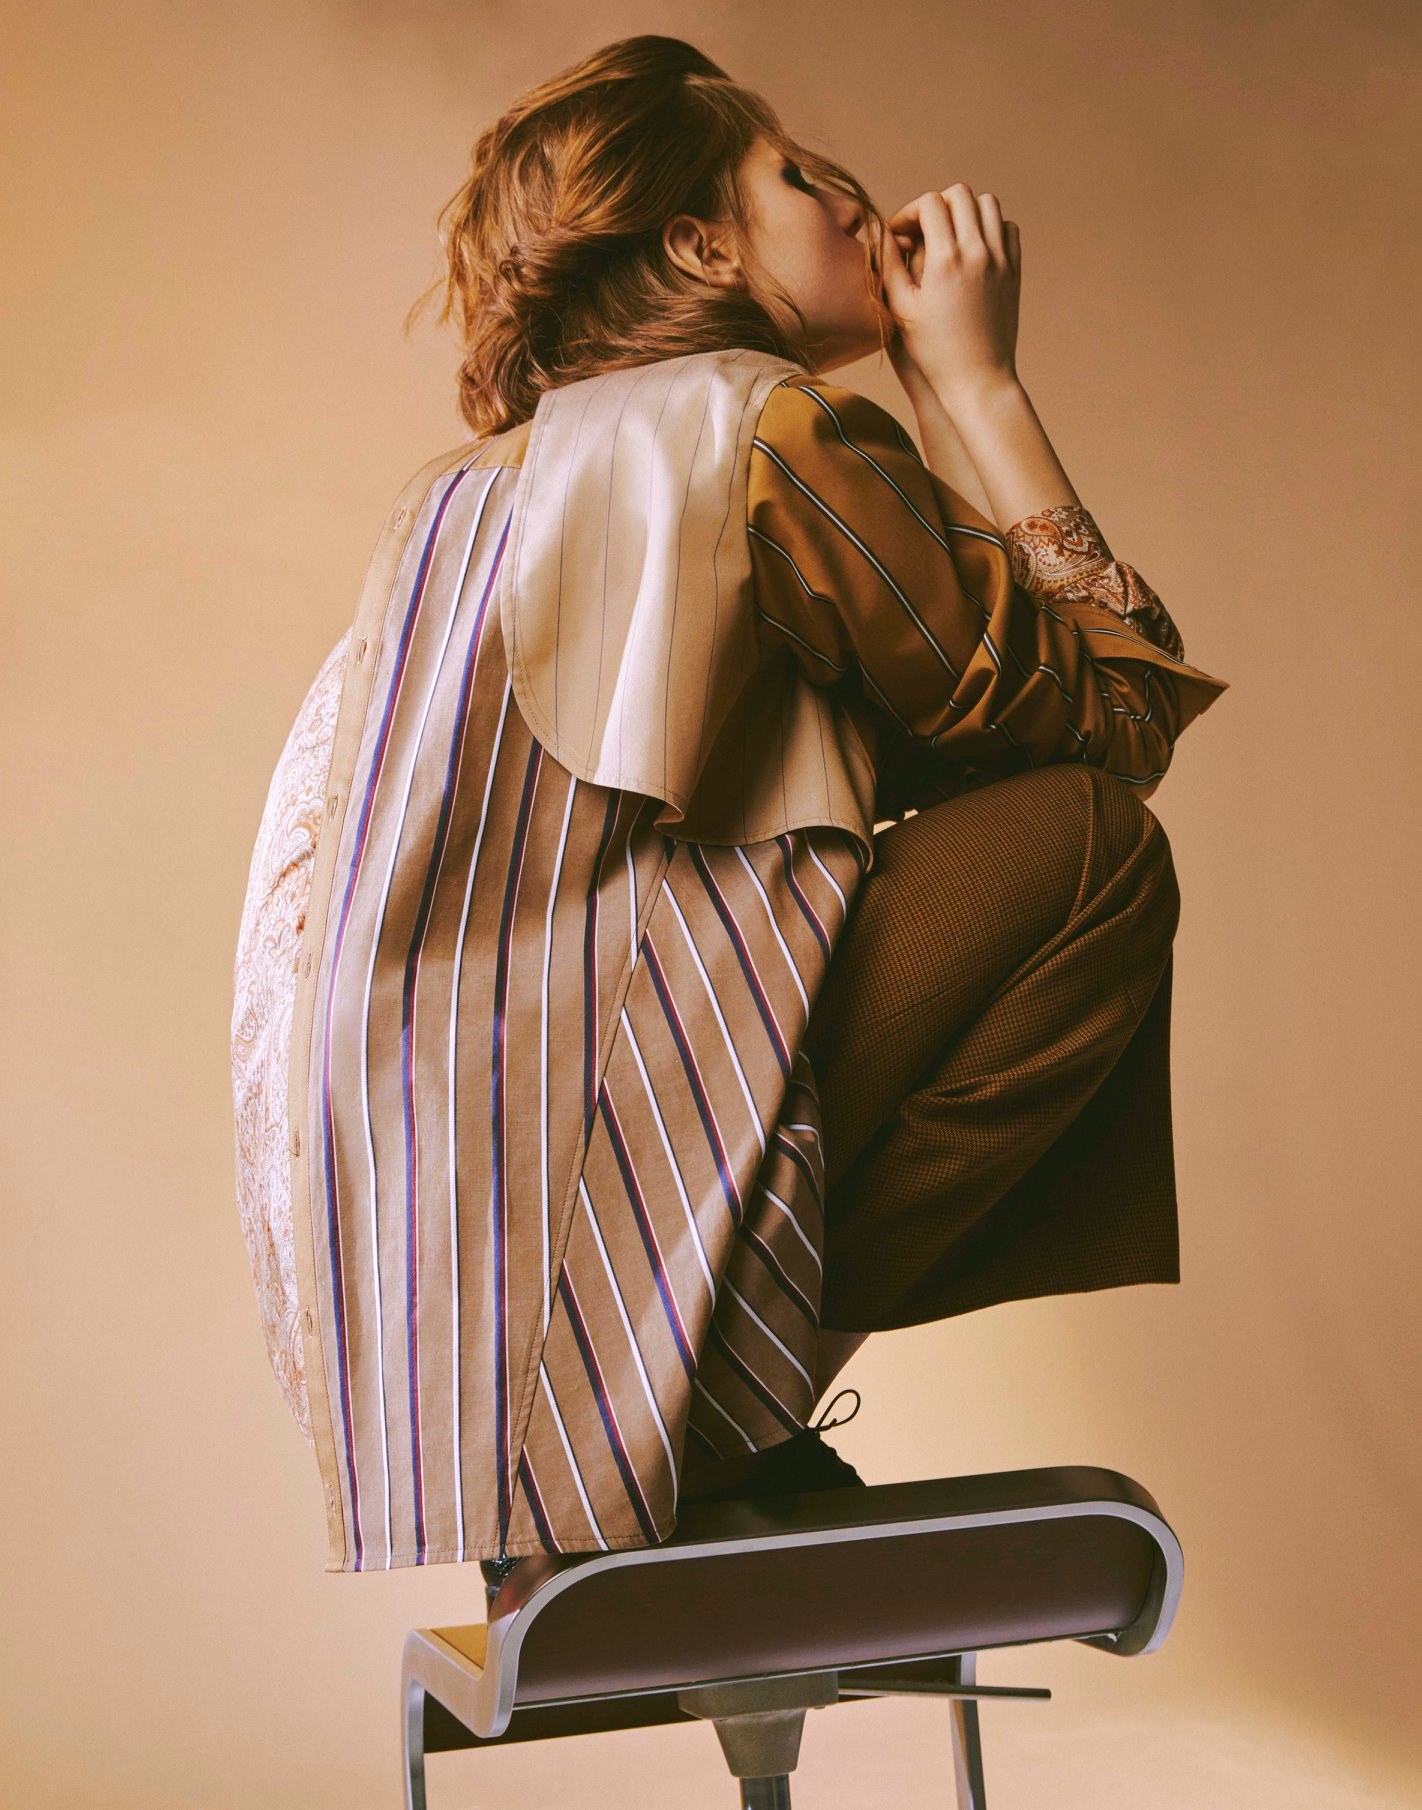 【Avant Garde Is Back】設計師Atsuro Tayama於新一季銳意要重回前衛時尚的風格，以其獨特的美學帶來一系列功能與時尚兼備的單品，採用男裝廓型結合拼布、超大口袋及中性條紋等元素，展現品牌別具個性、剛柔並重的時尚魅力。 更多Atsuro Tayama單品在Sidefame網店發售﹕